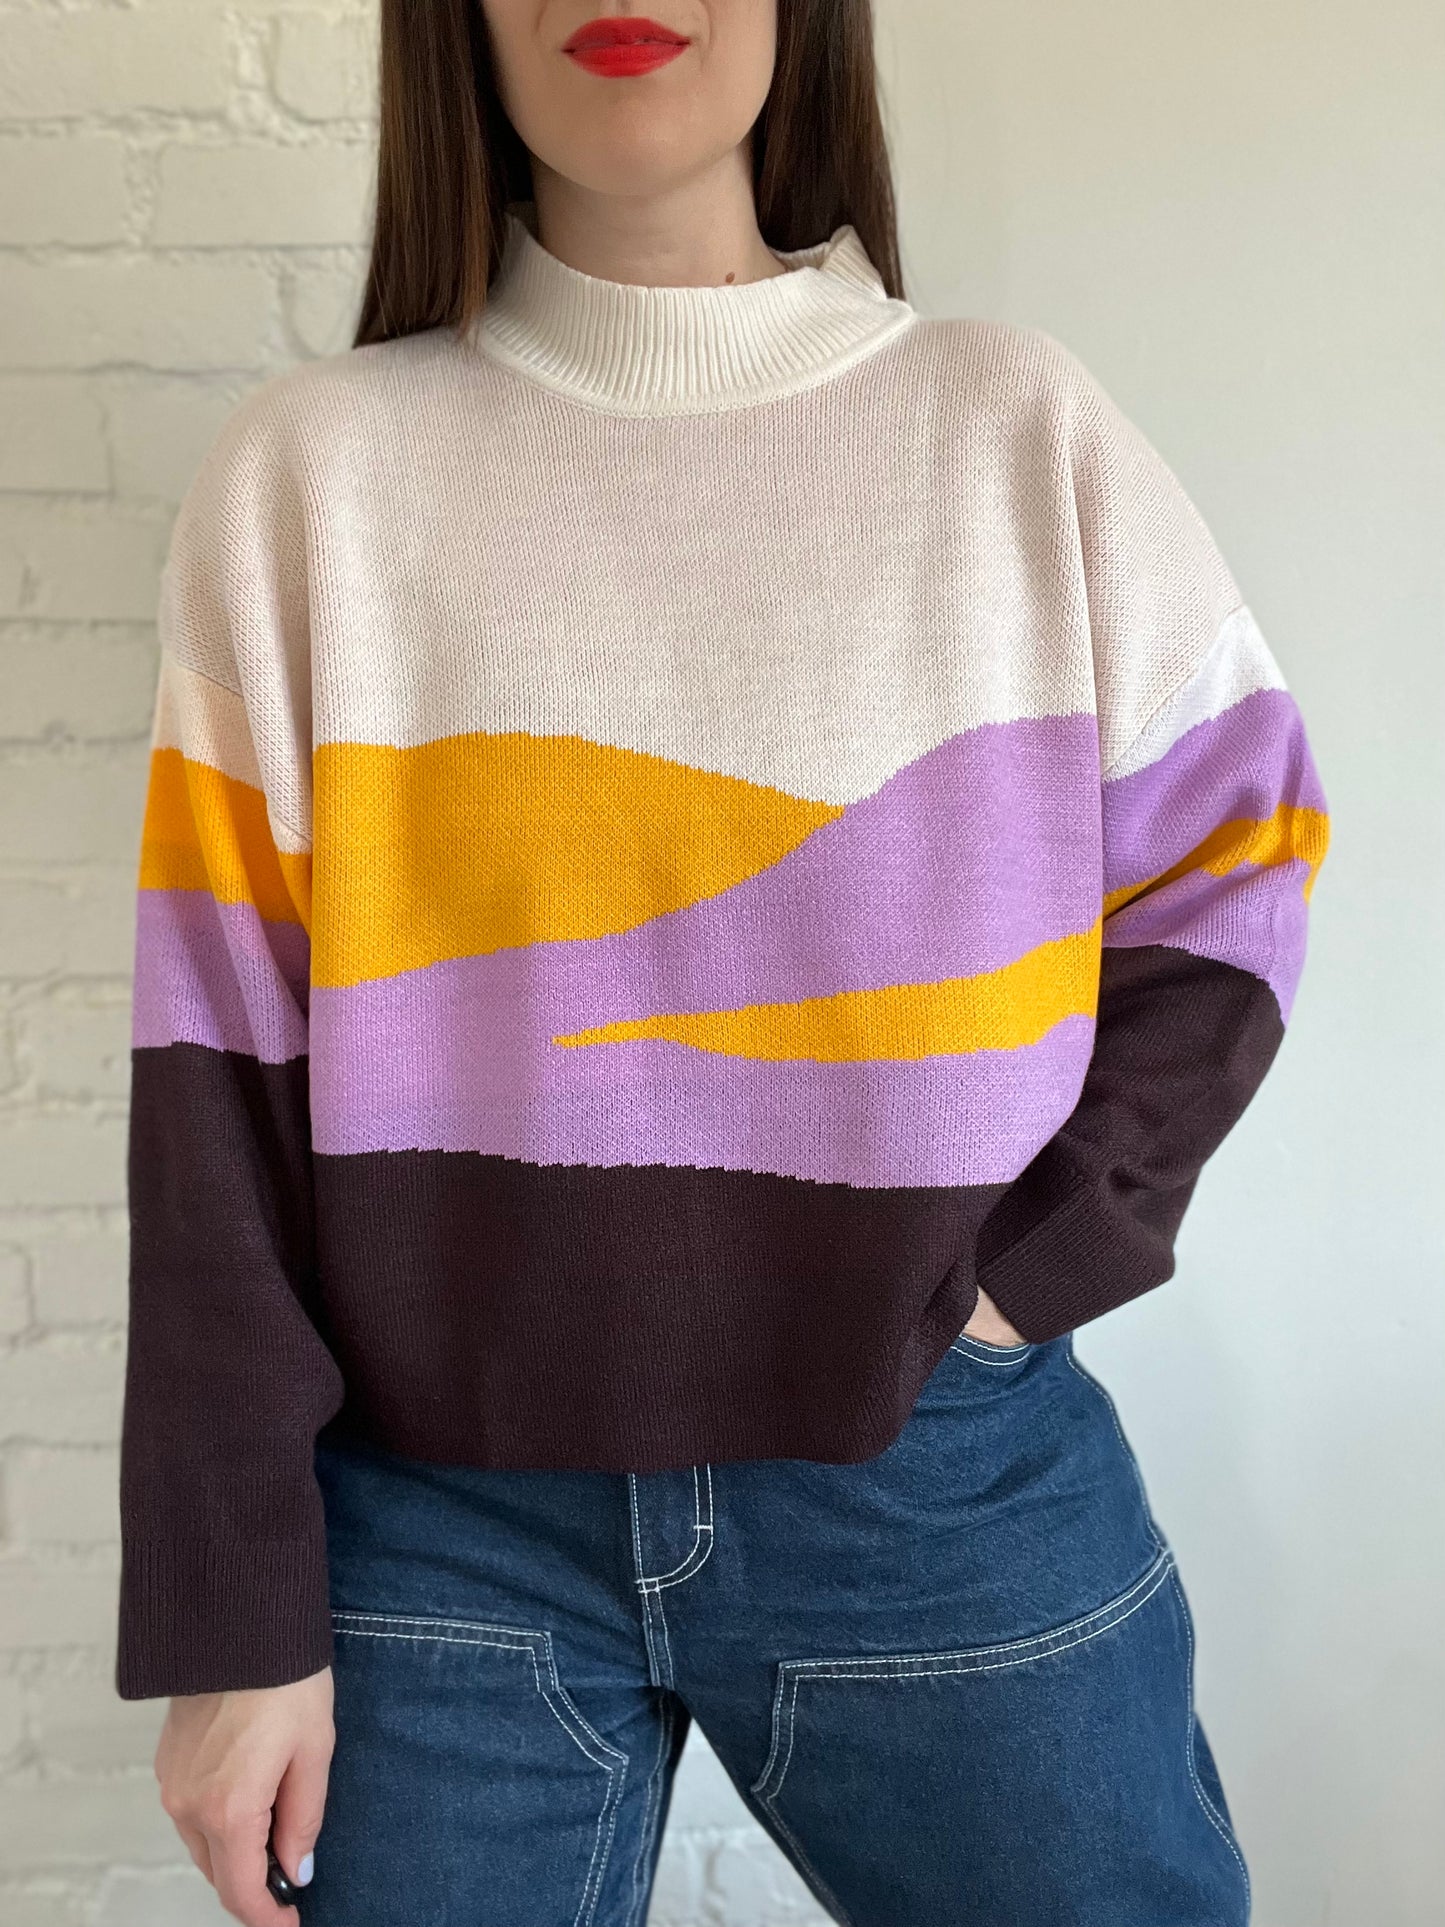 Sunset Mountains Sweater - XL